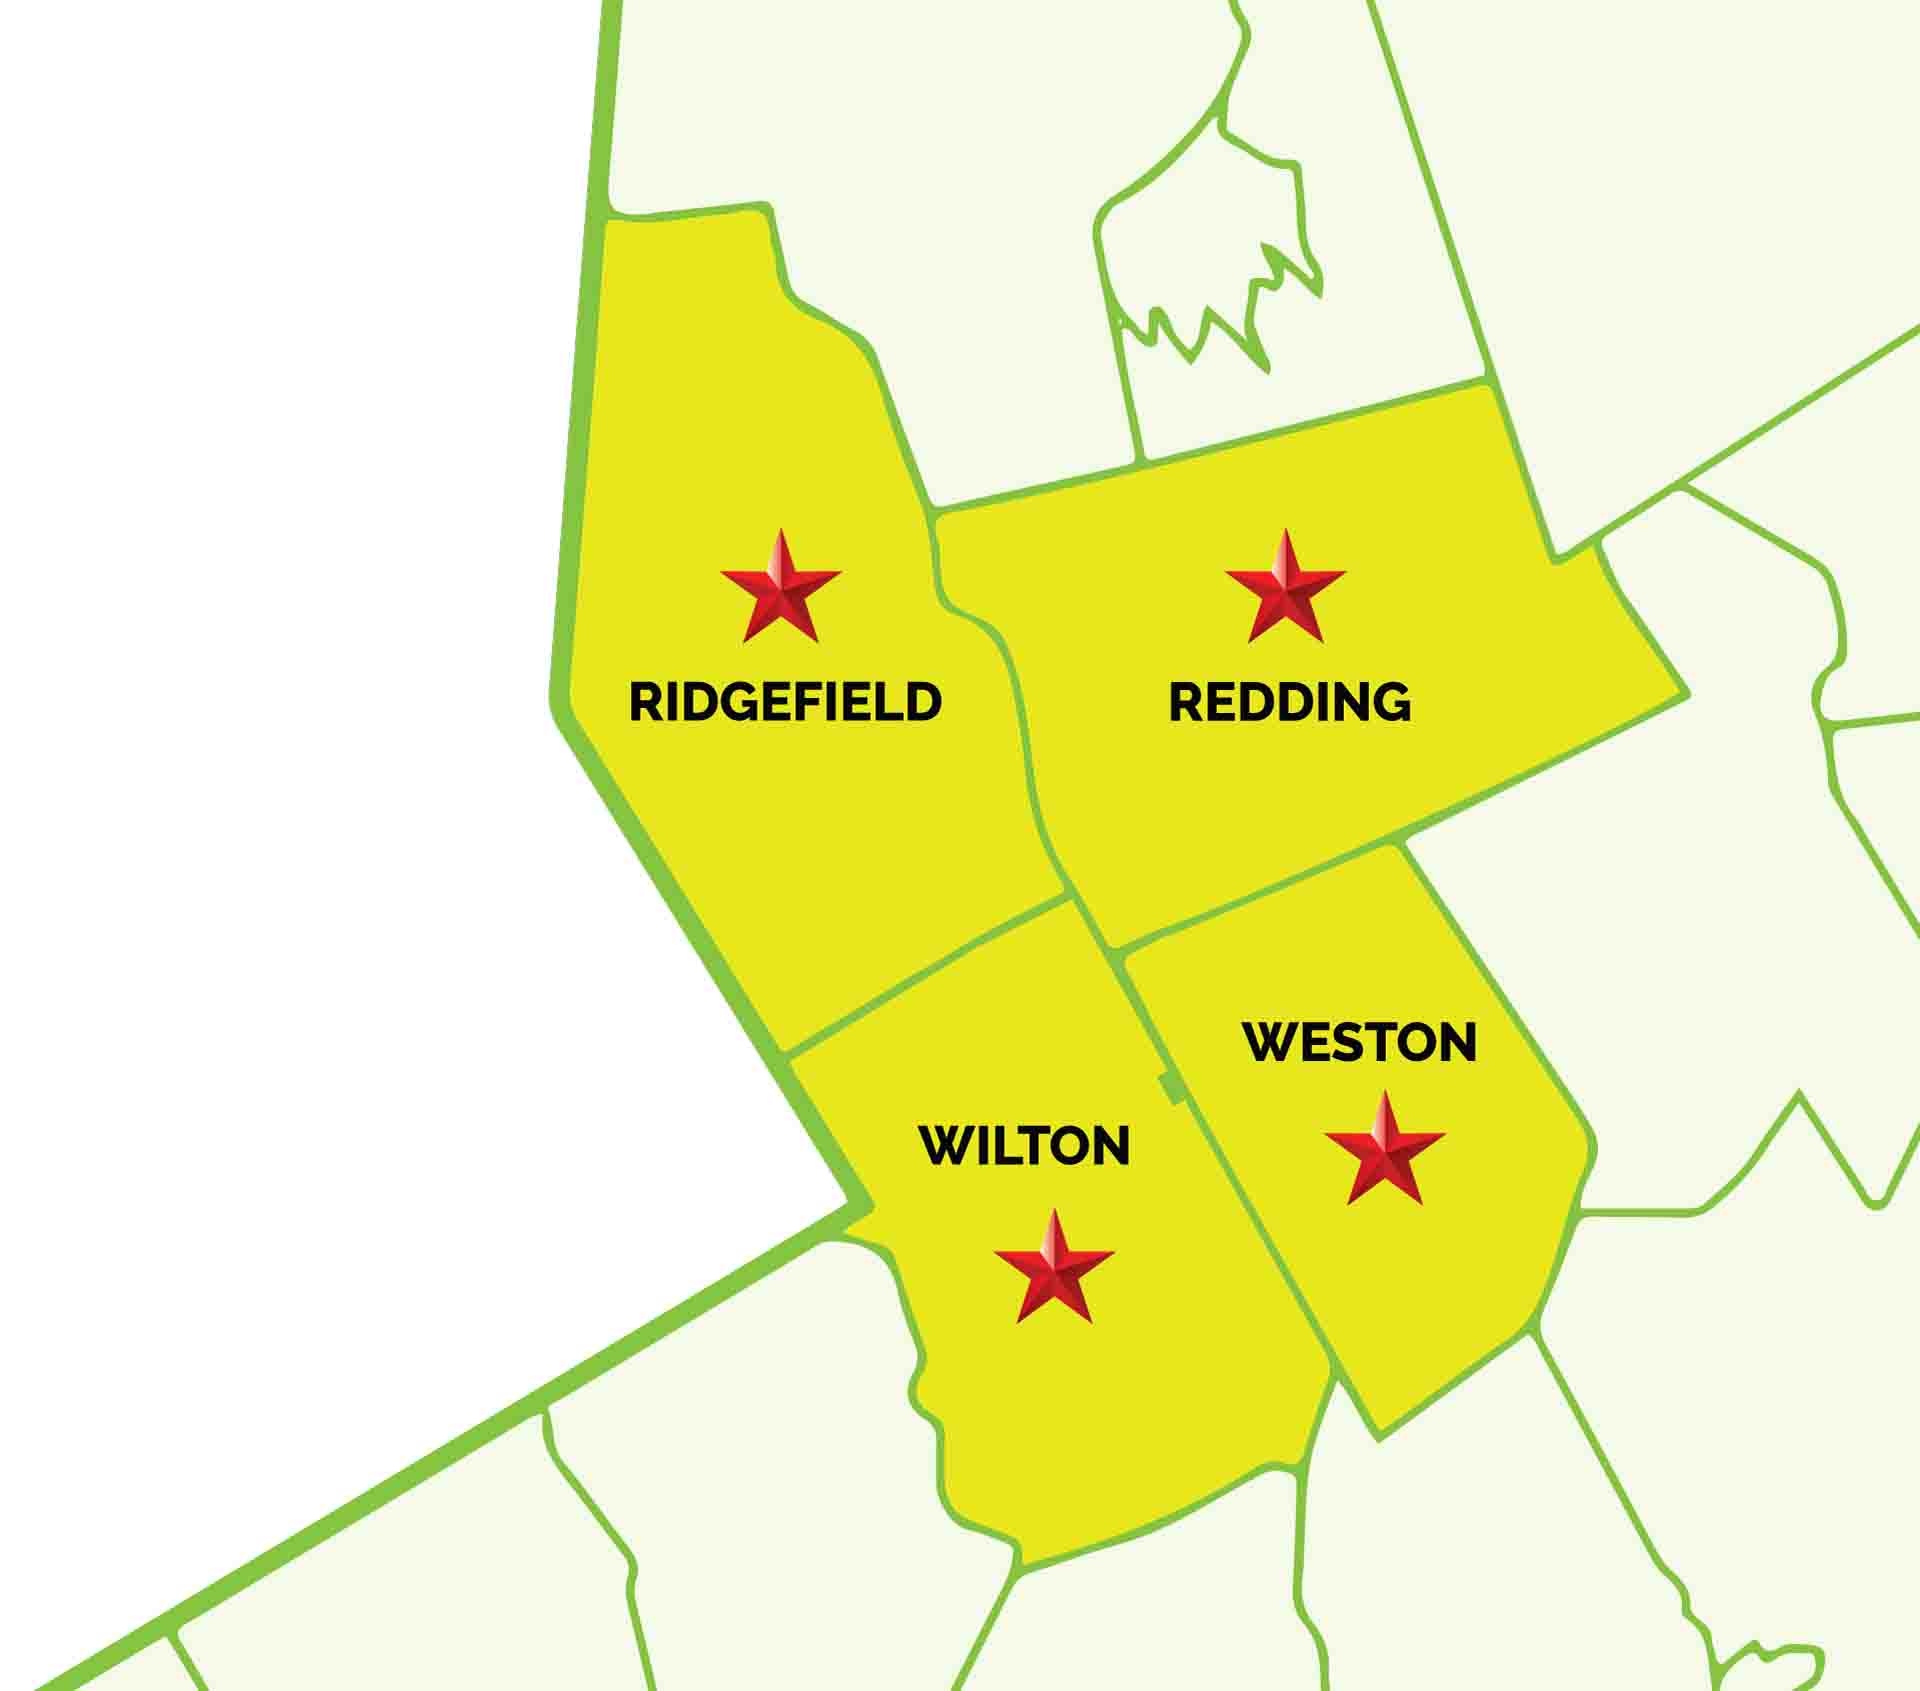 A-Z Landscaping Service Map - Ridgefield - Redding - Wilton - Weston Connecticut